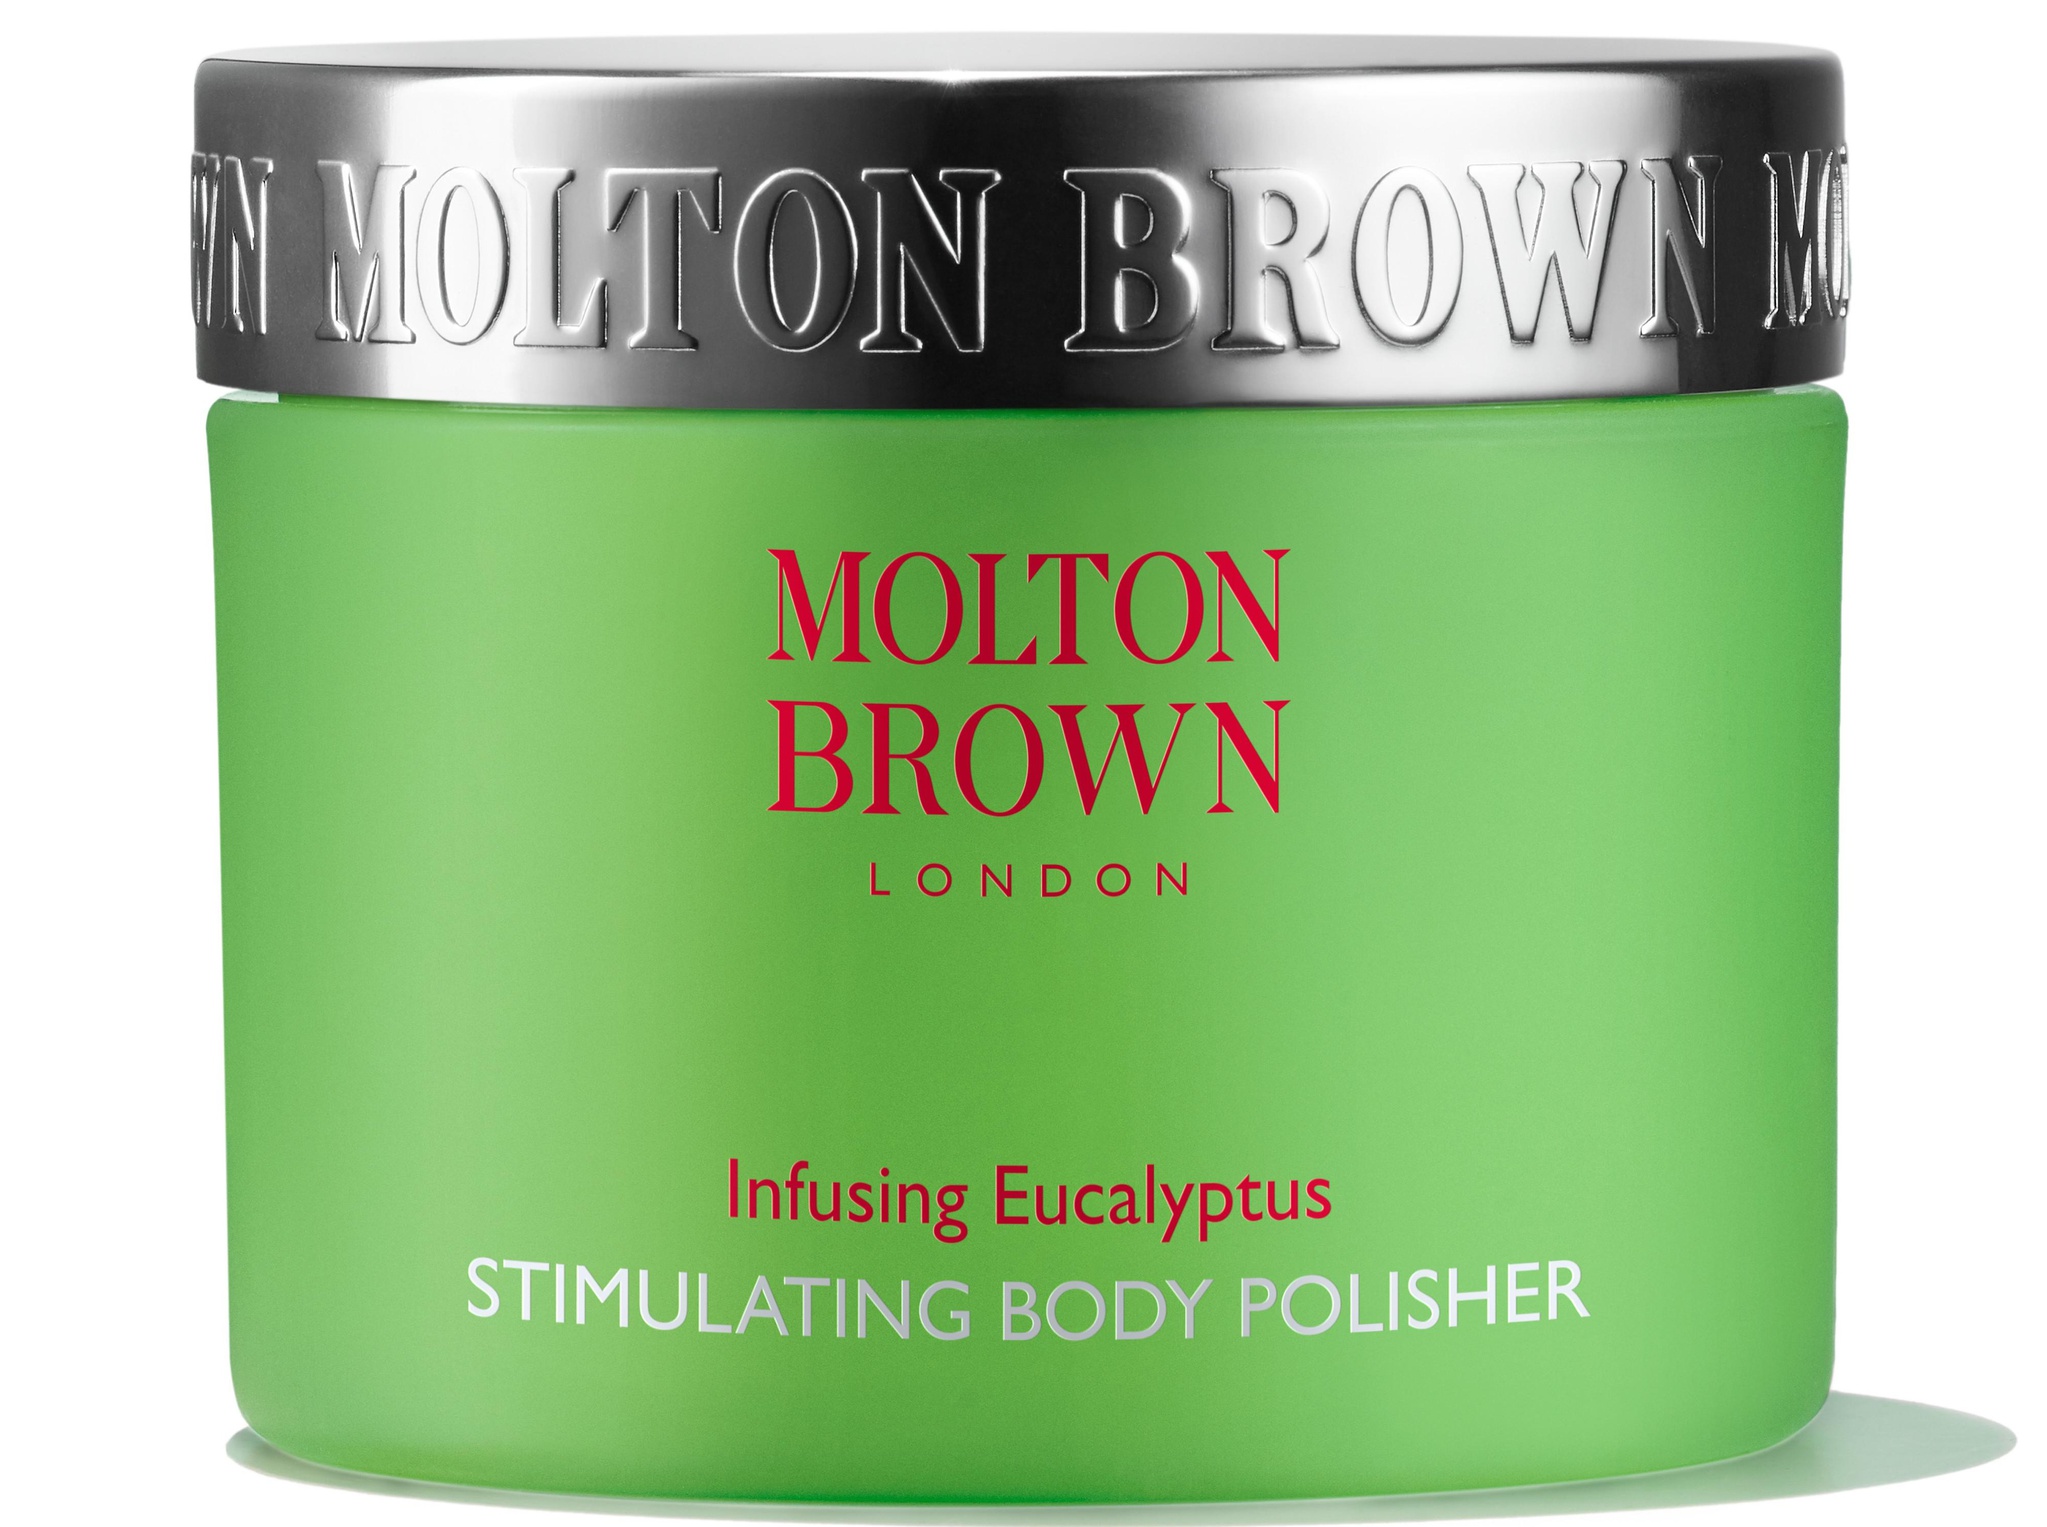 Molton Brown Infusing Eucalyptus Stimulating Body Polisher